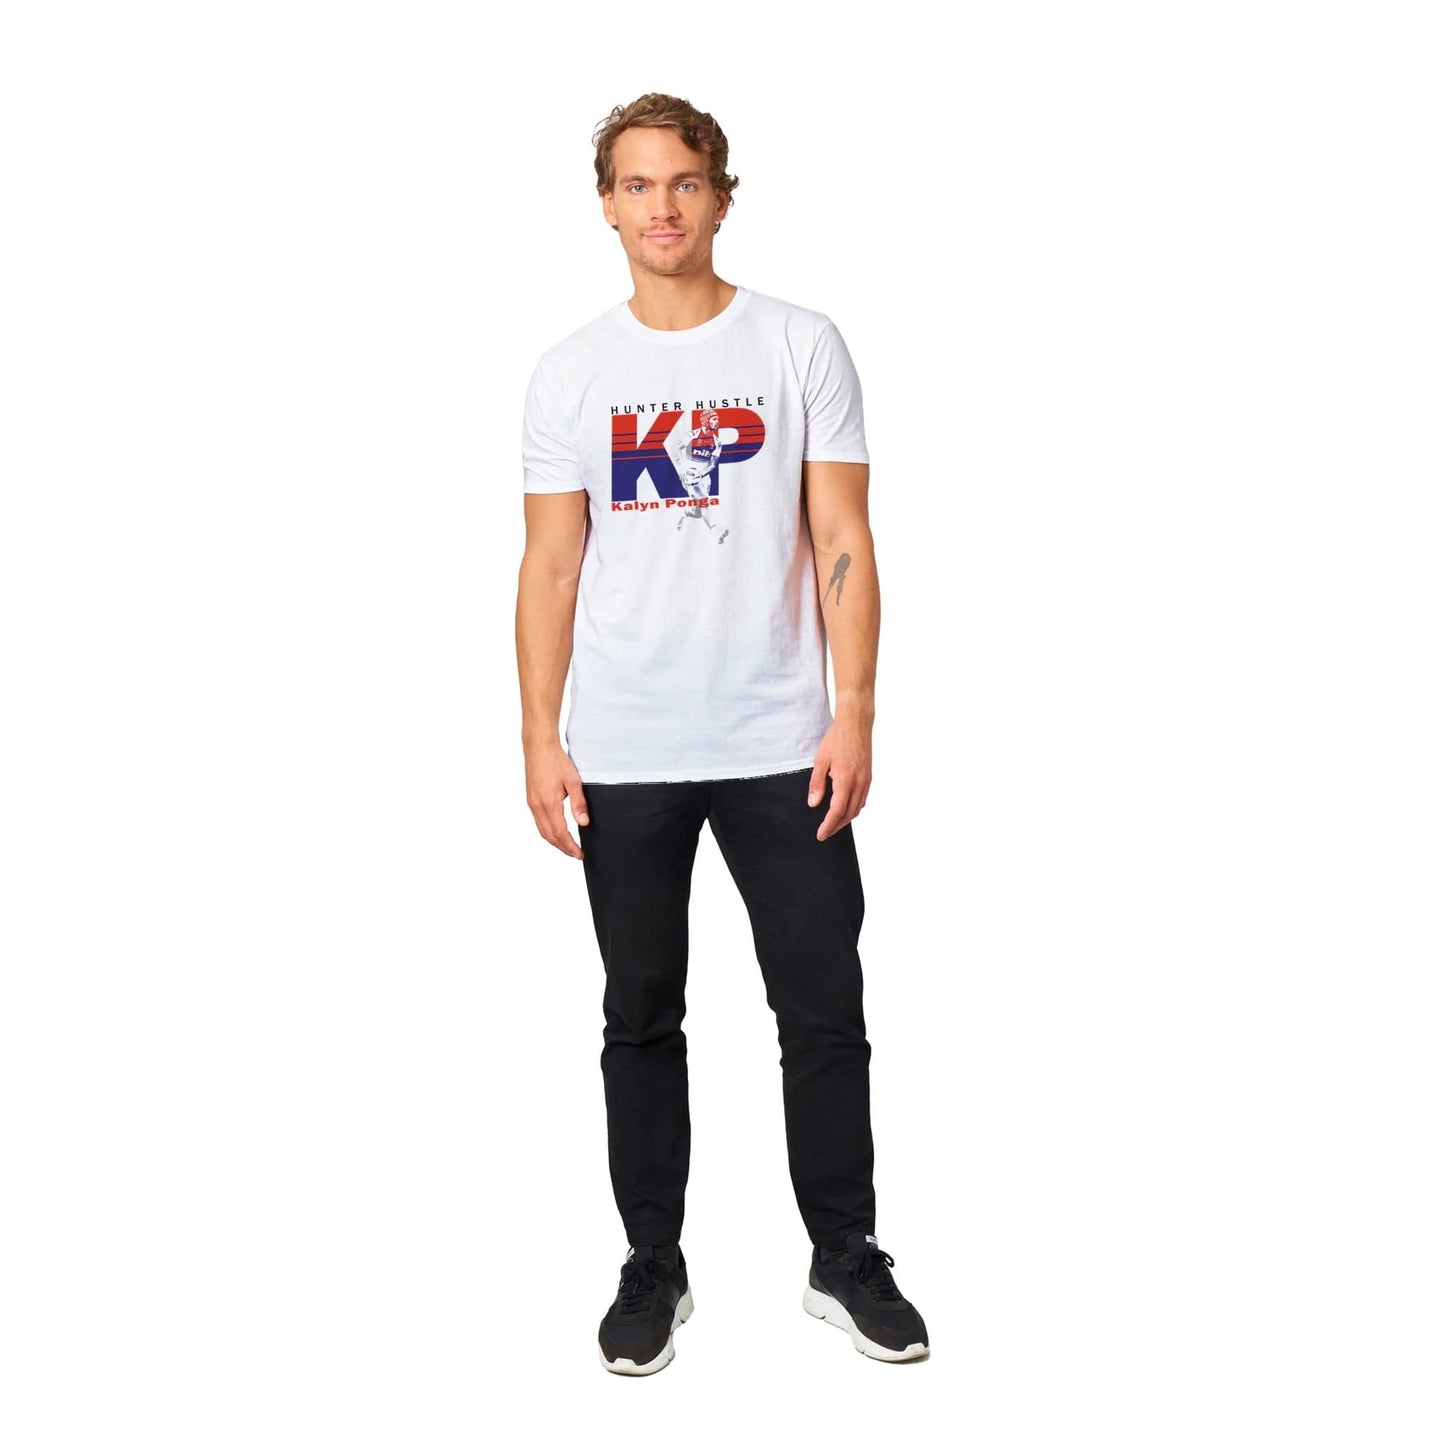 Kalyn Ponga KP T-Shirt Graphic Tee Australia Online